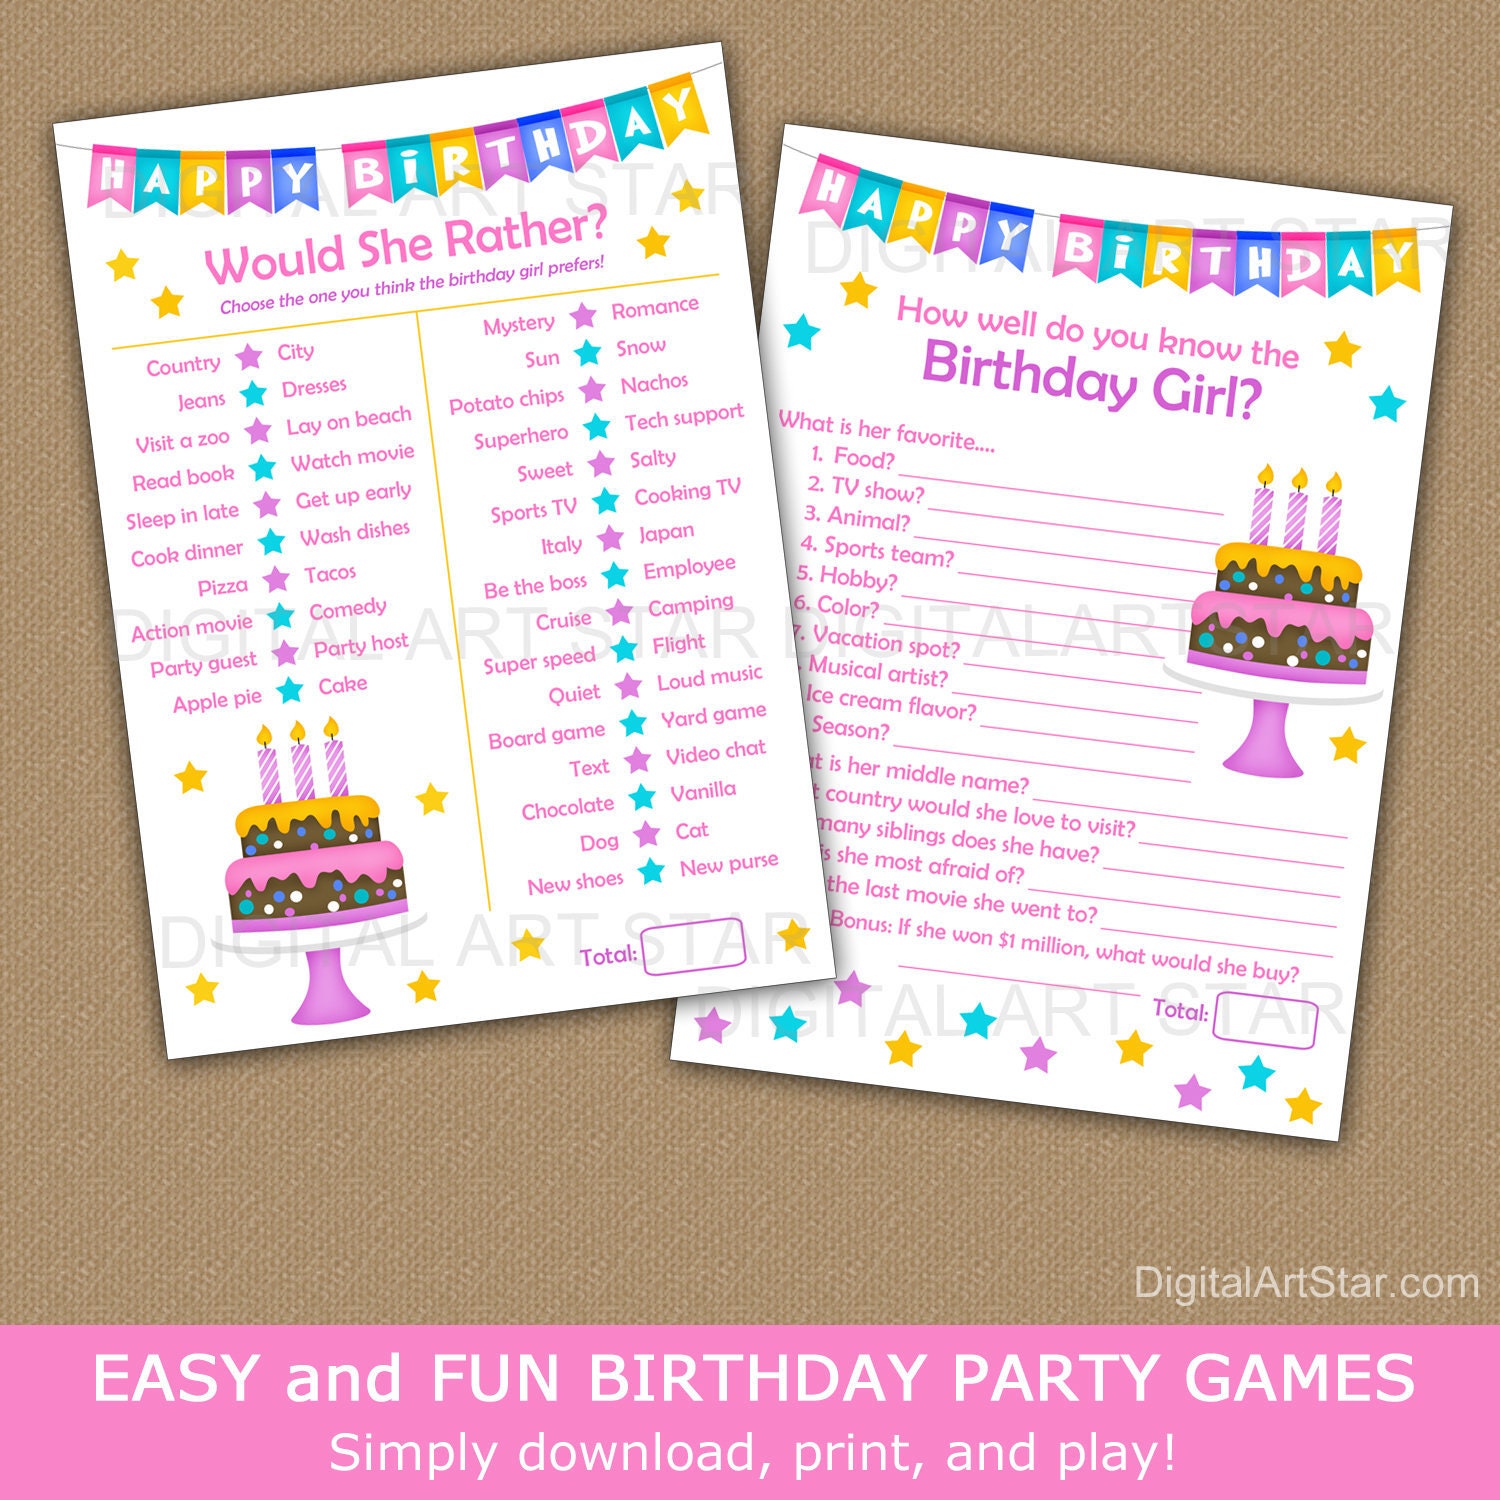 GAMES FOR GIRLS - Play Games for Girls on Poki  Birthday surprise party,  Birthday surprise, Games for girls